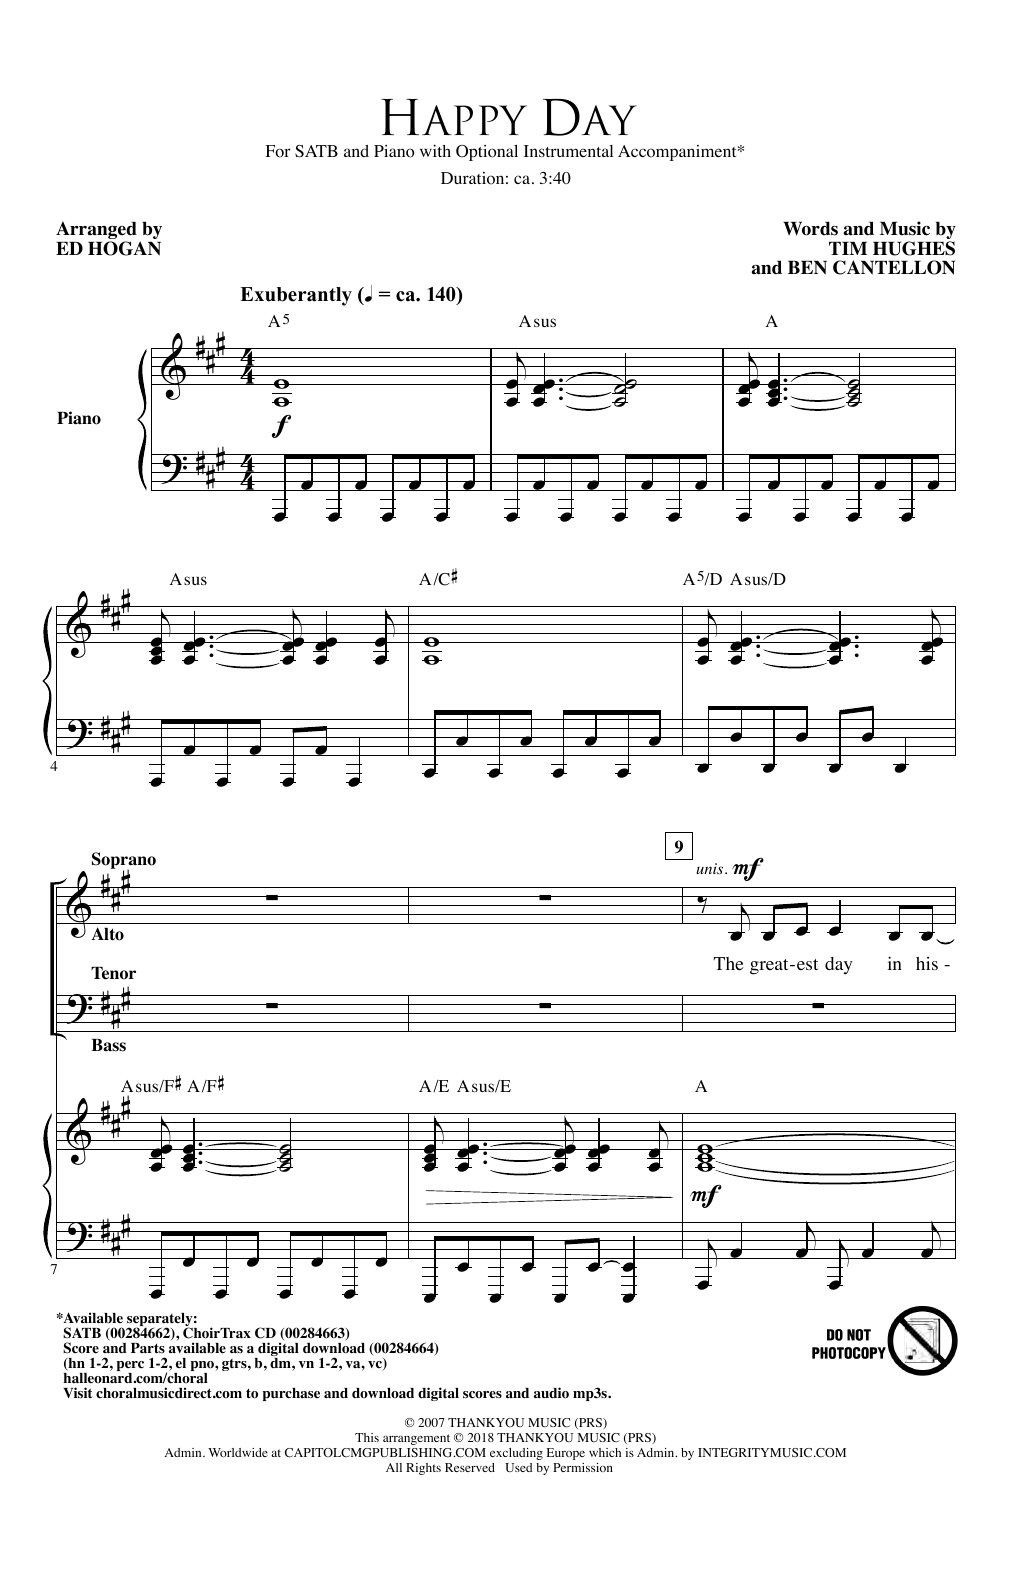 Tim Hughes & Ben Cantellon Happy Day (arr. Ed Hogan) Sheet Music Notes & Chords for SATB Choir - Download or Print PDF